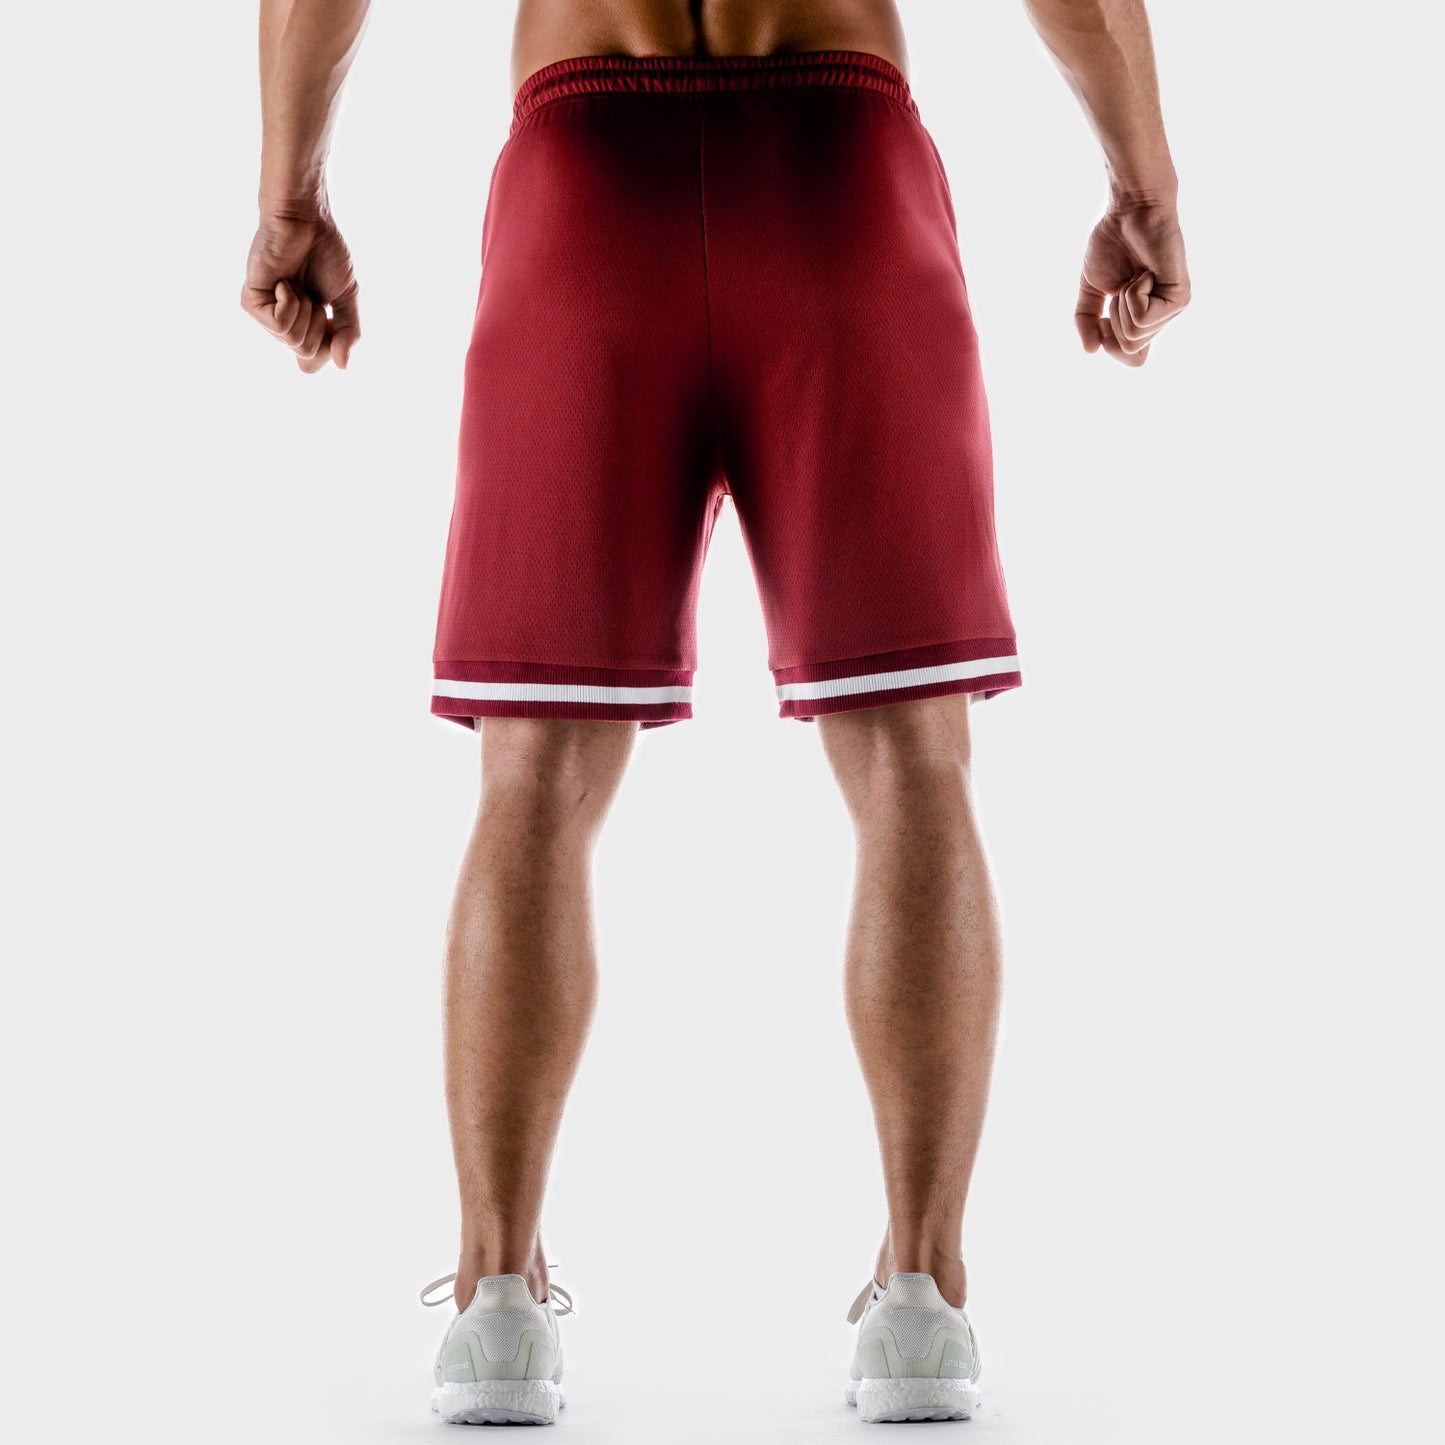 squatwolf-workout-short-for-men-hybrid-2-0-basketball-shorts-maroon-gym-wear